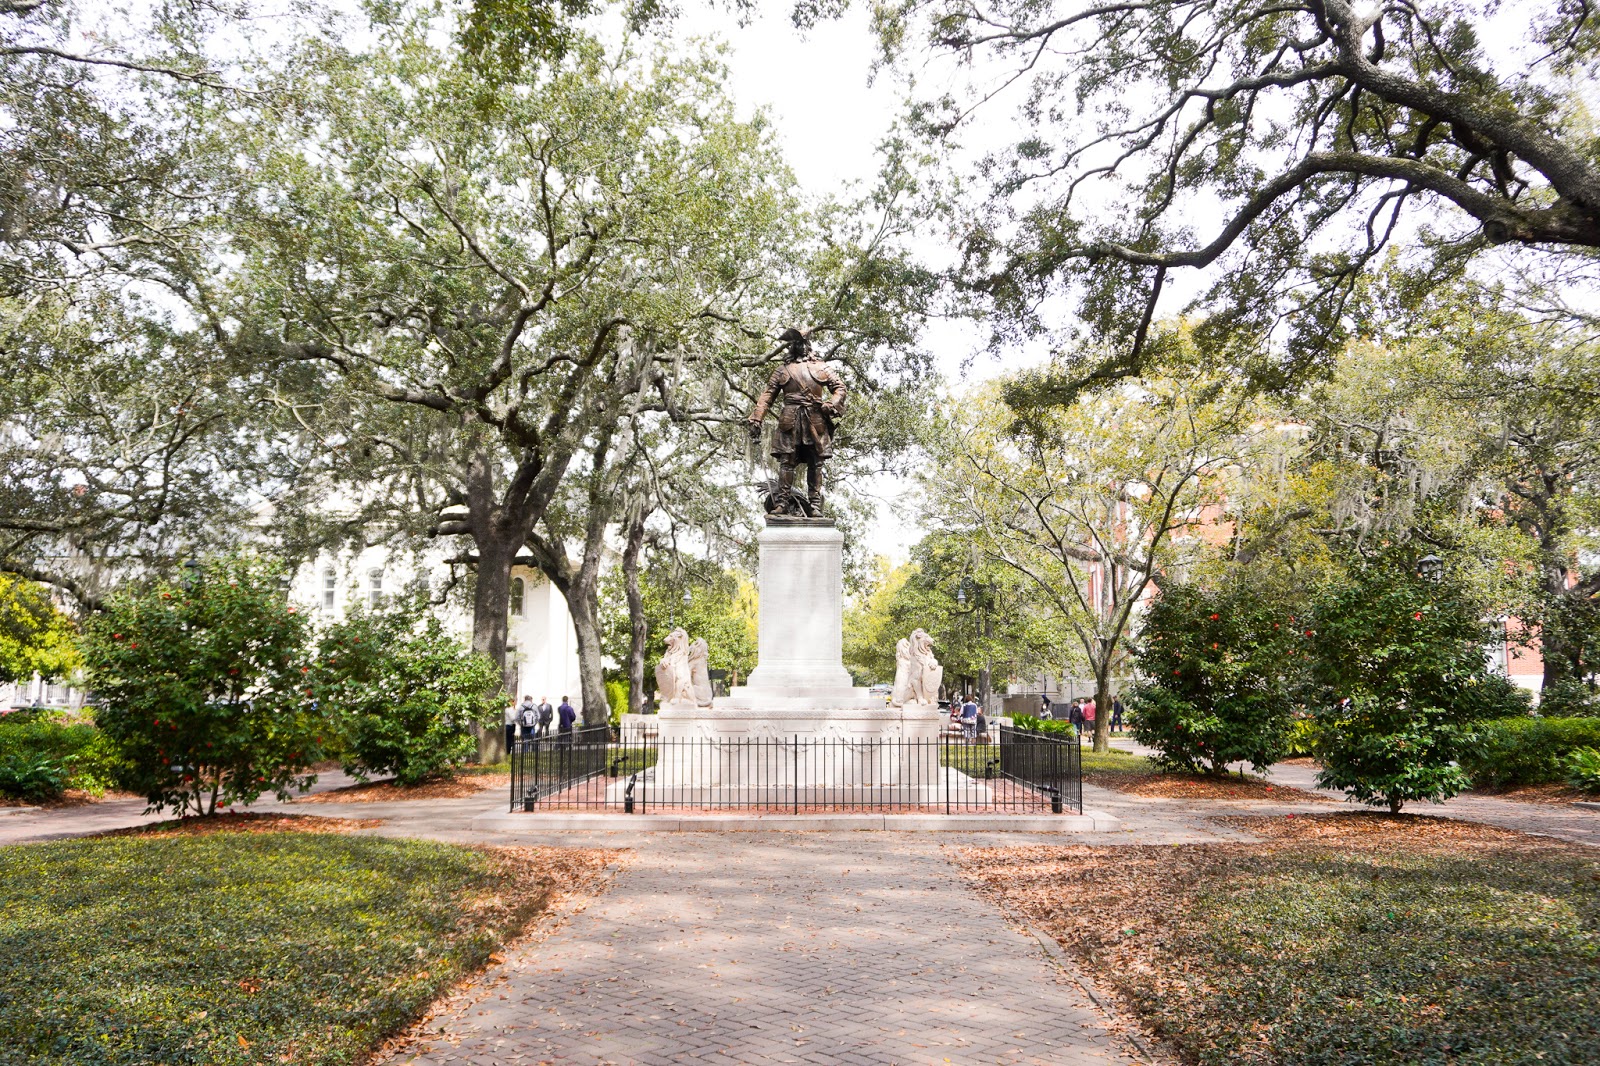 Chippewa Square in Savannah, Georgia